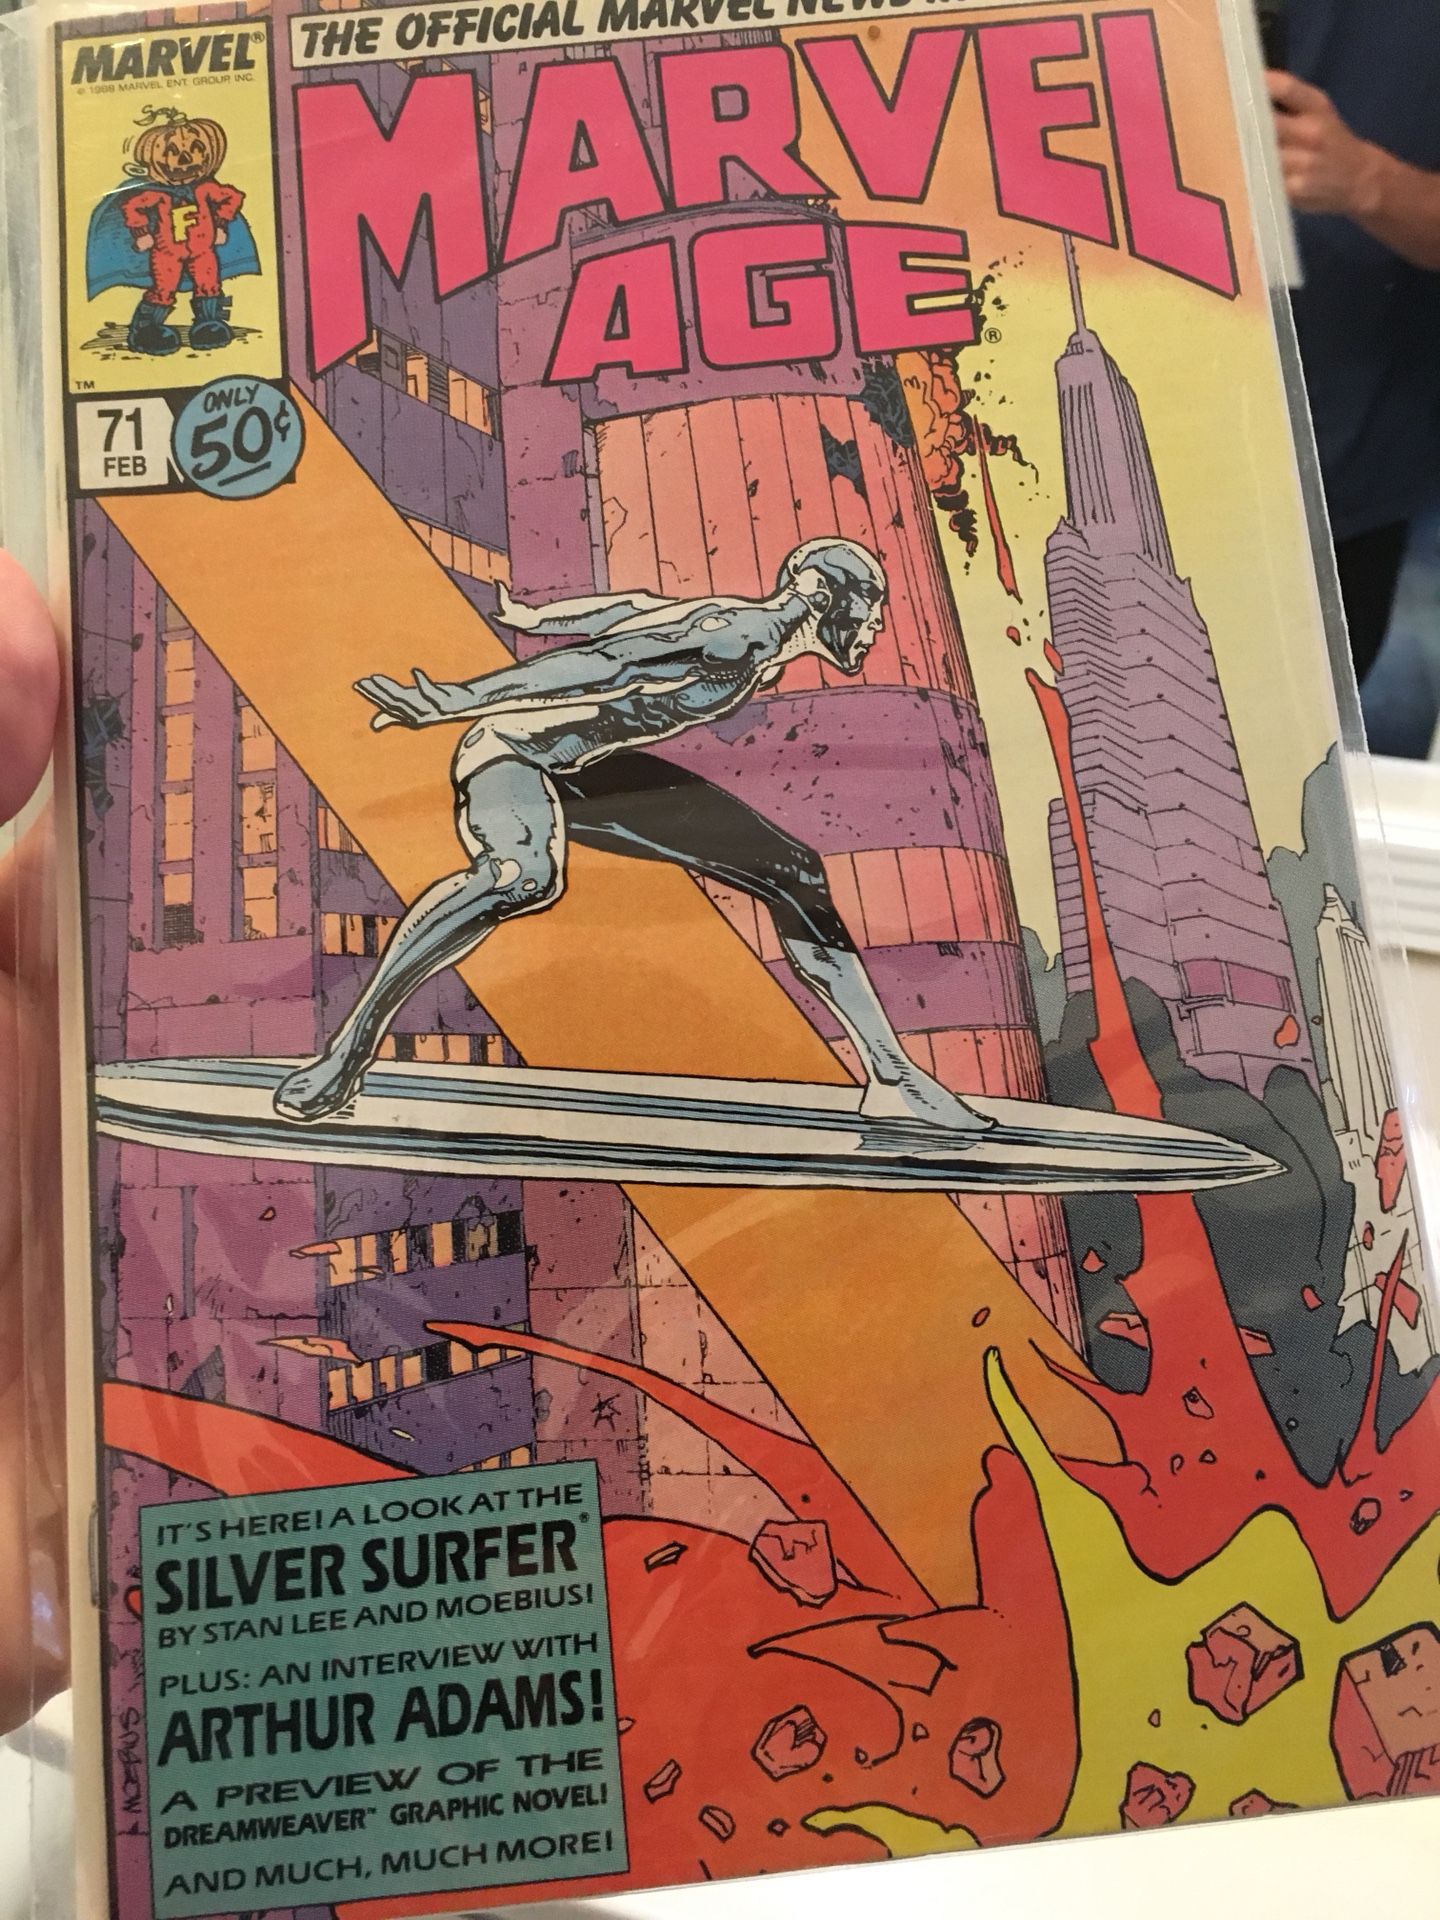 Marvel Age-Silver Surfer Comic - Feb 71 -rare! Awesome collectors comic!!